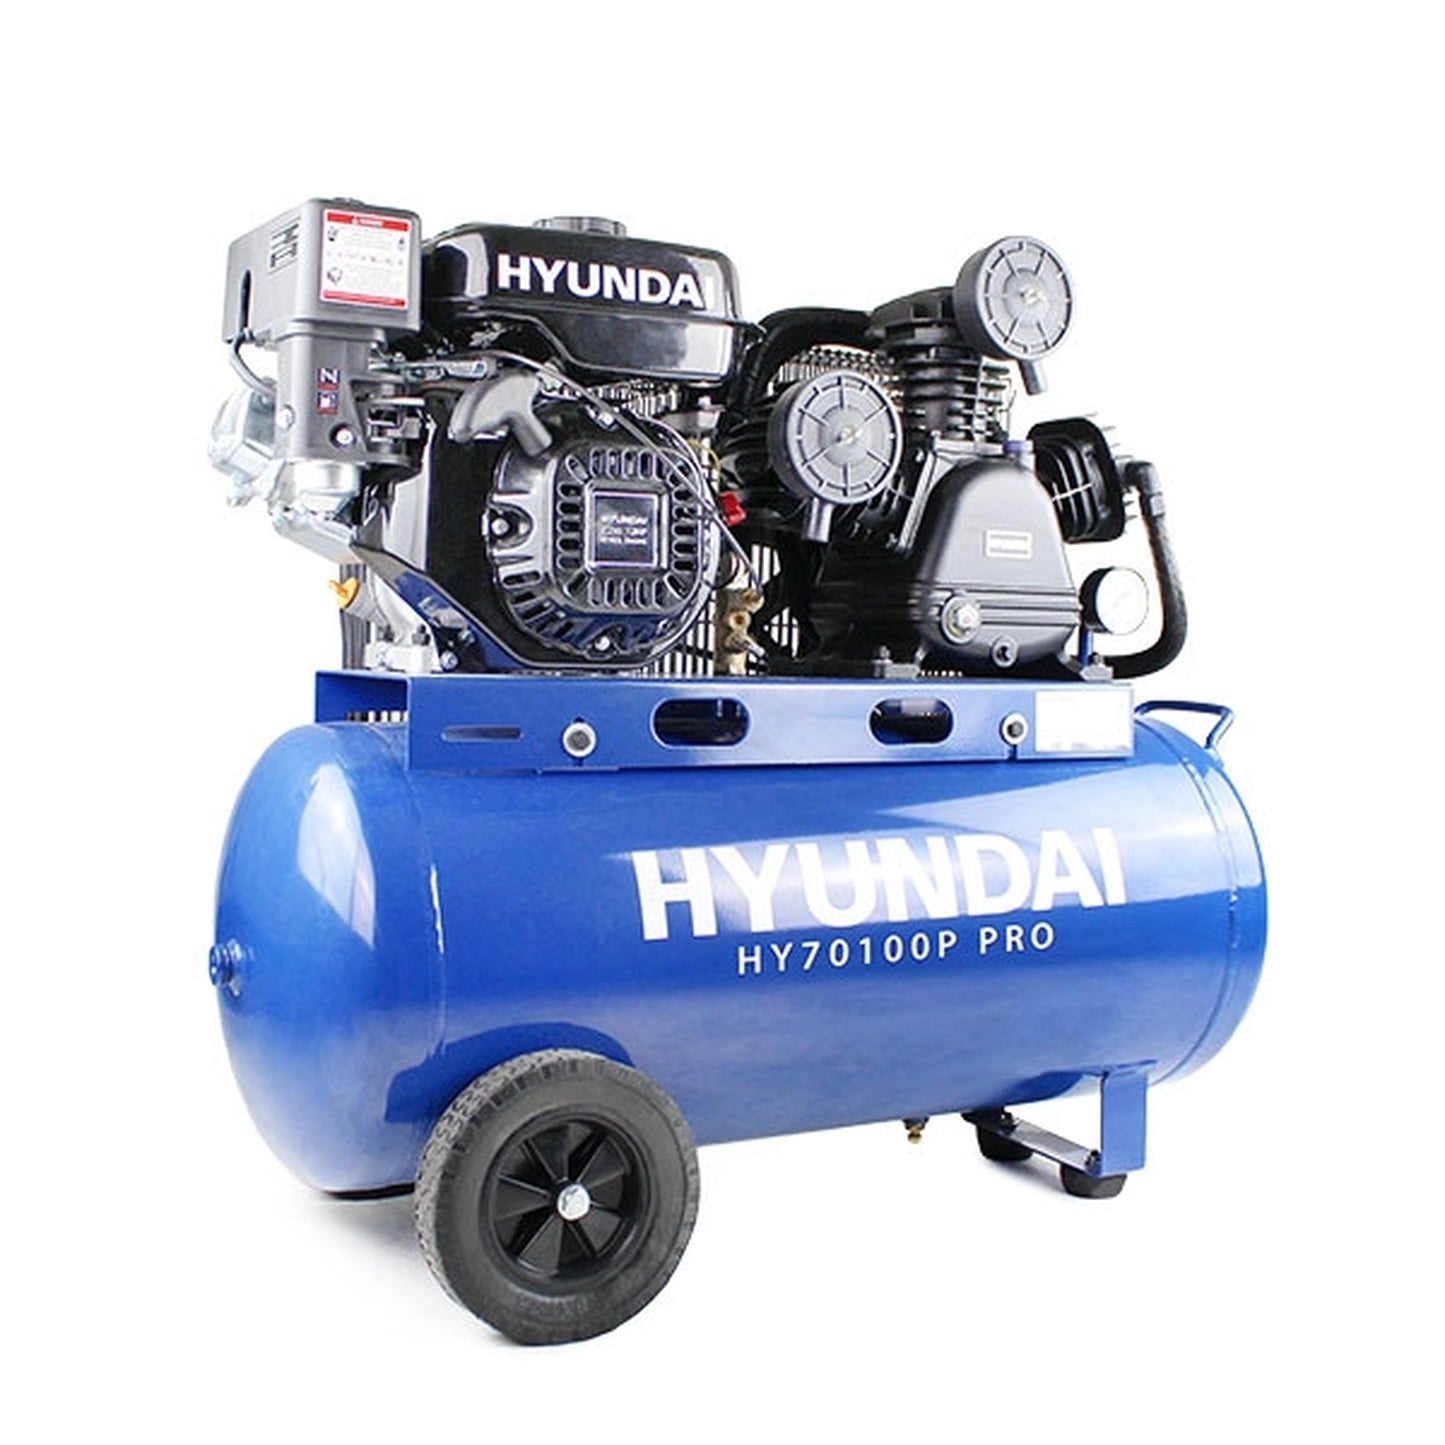 Hyundai HY70100P Petrol Air Compressor 90L